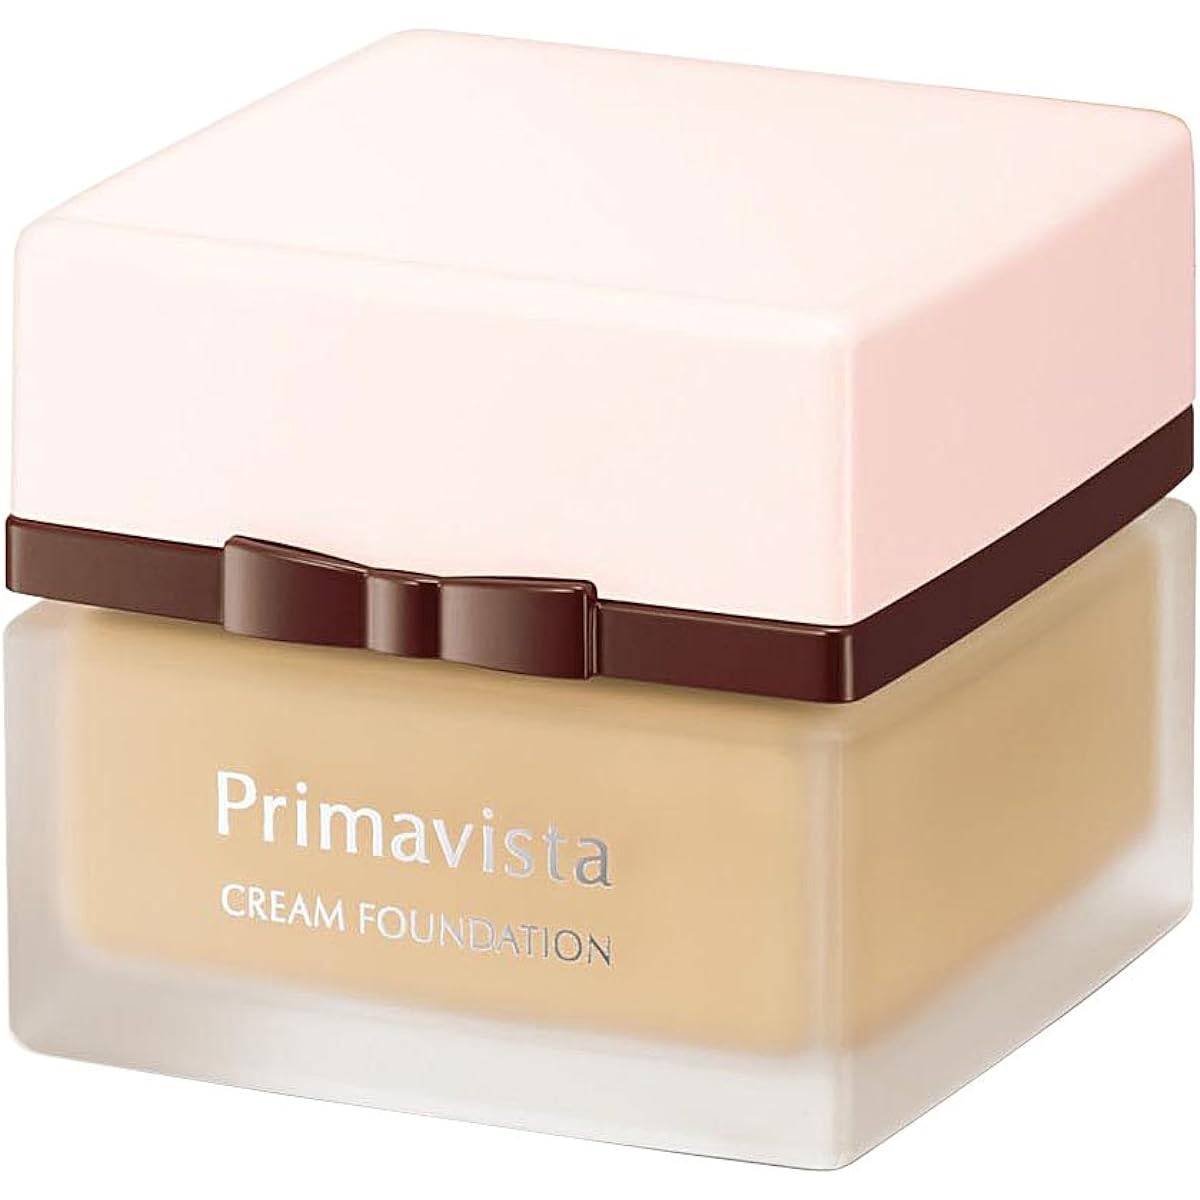 Primavista Cream Foundation Pink Ocher 03 SPF15 PA++ 30g